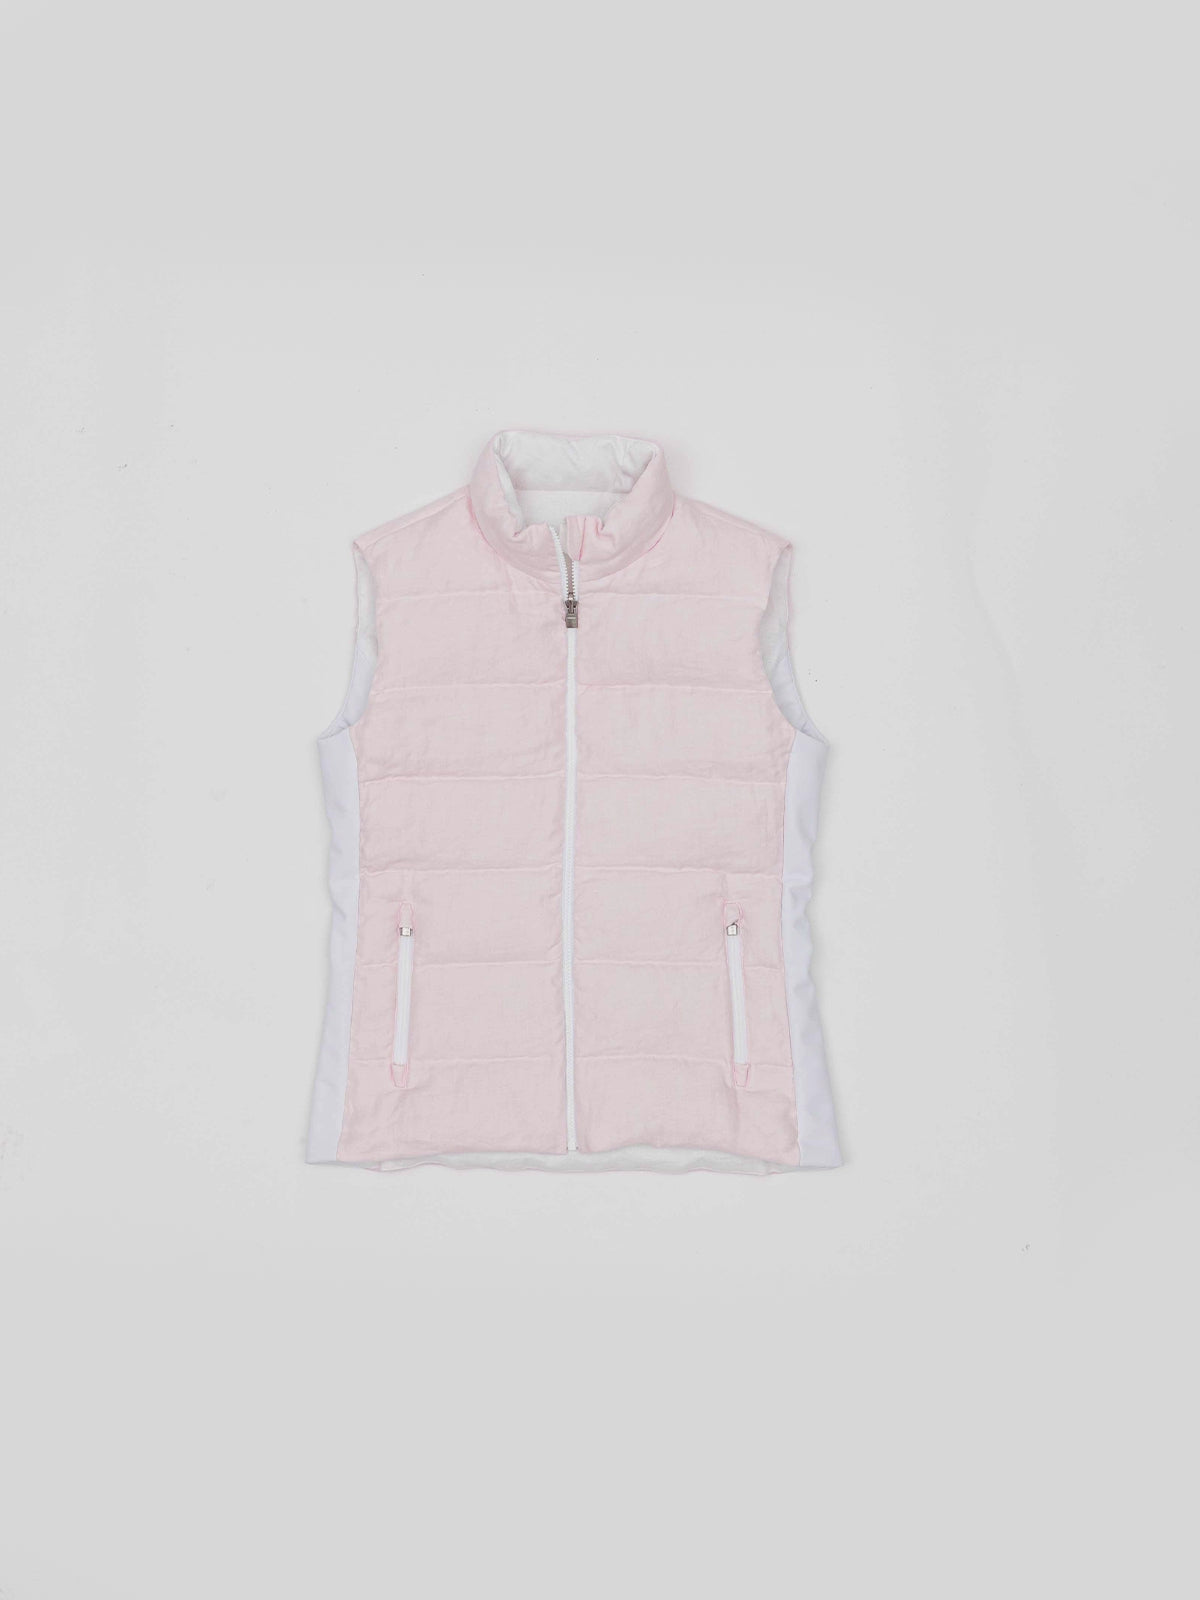 Gilet Ischia Women 100% Capri pink and white linen reversible gilet 